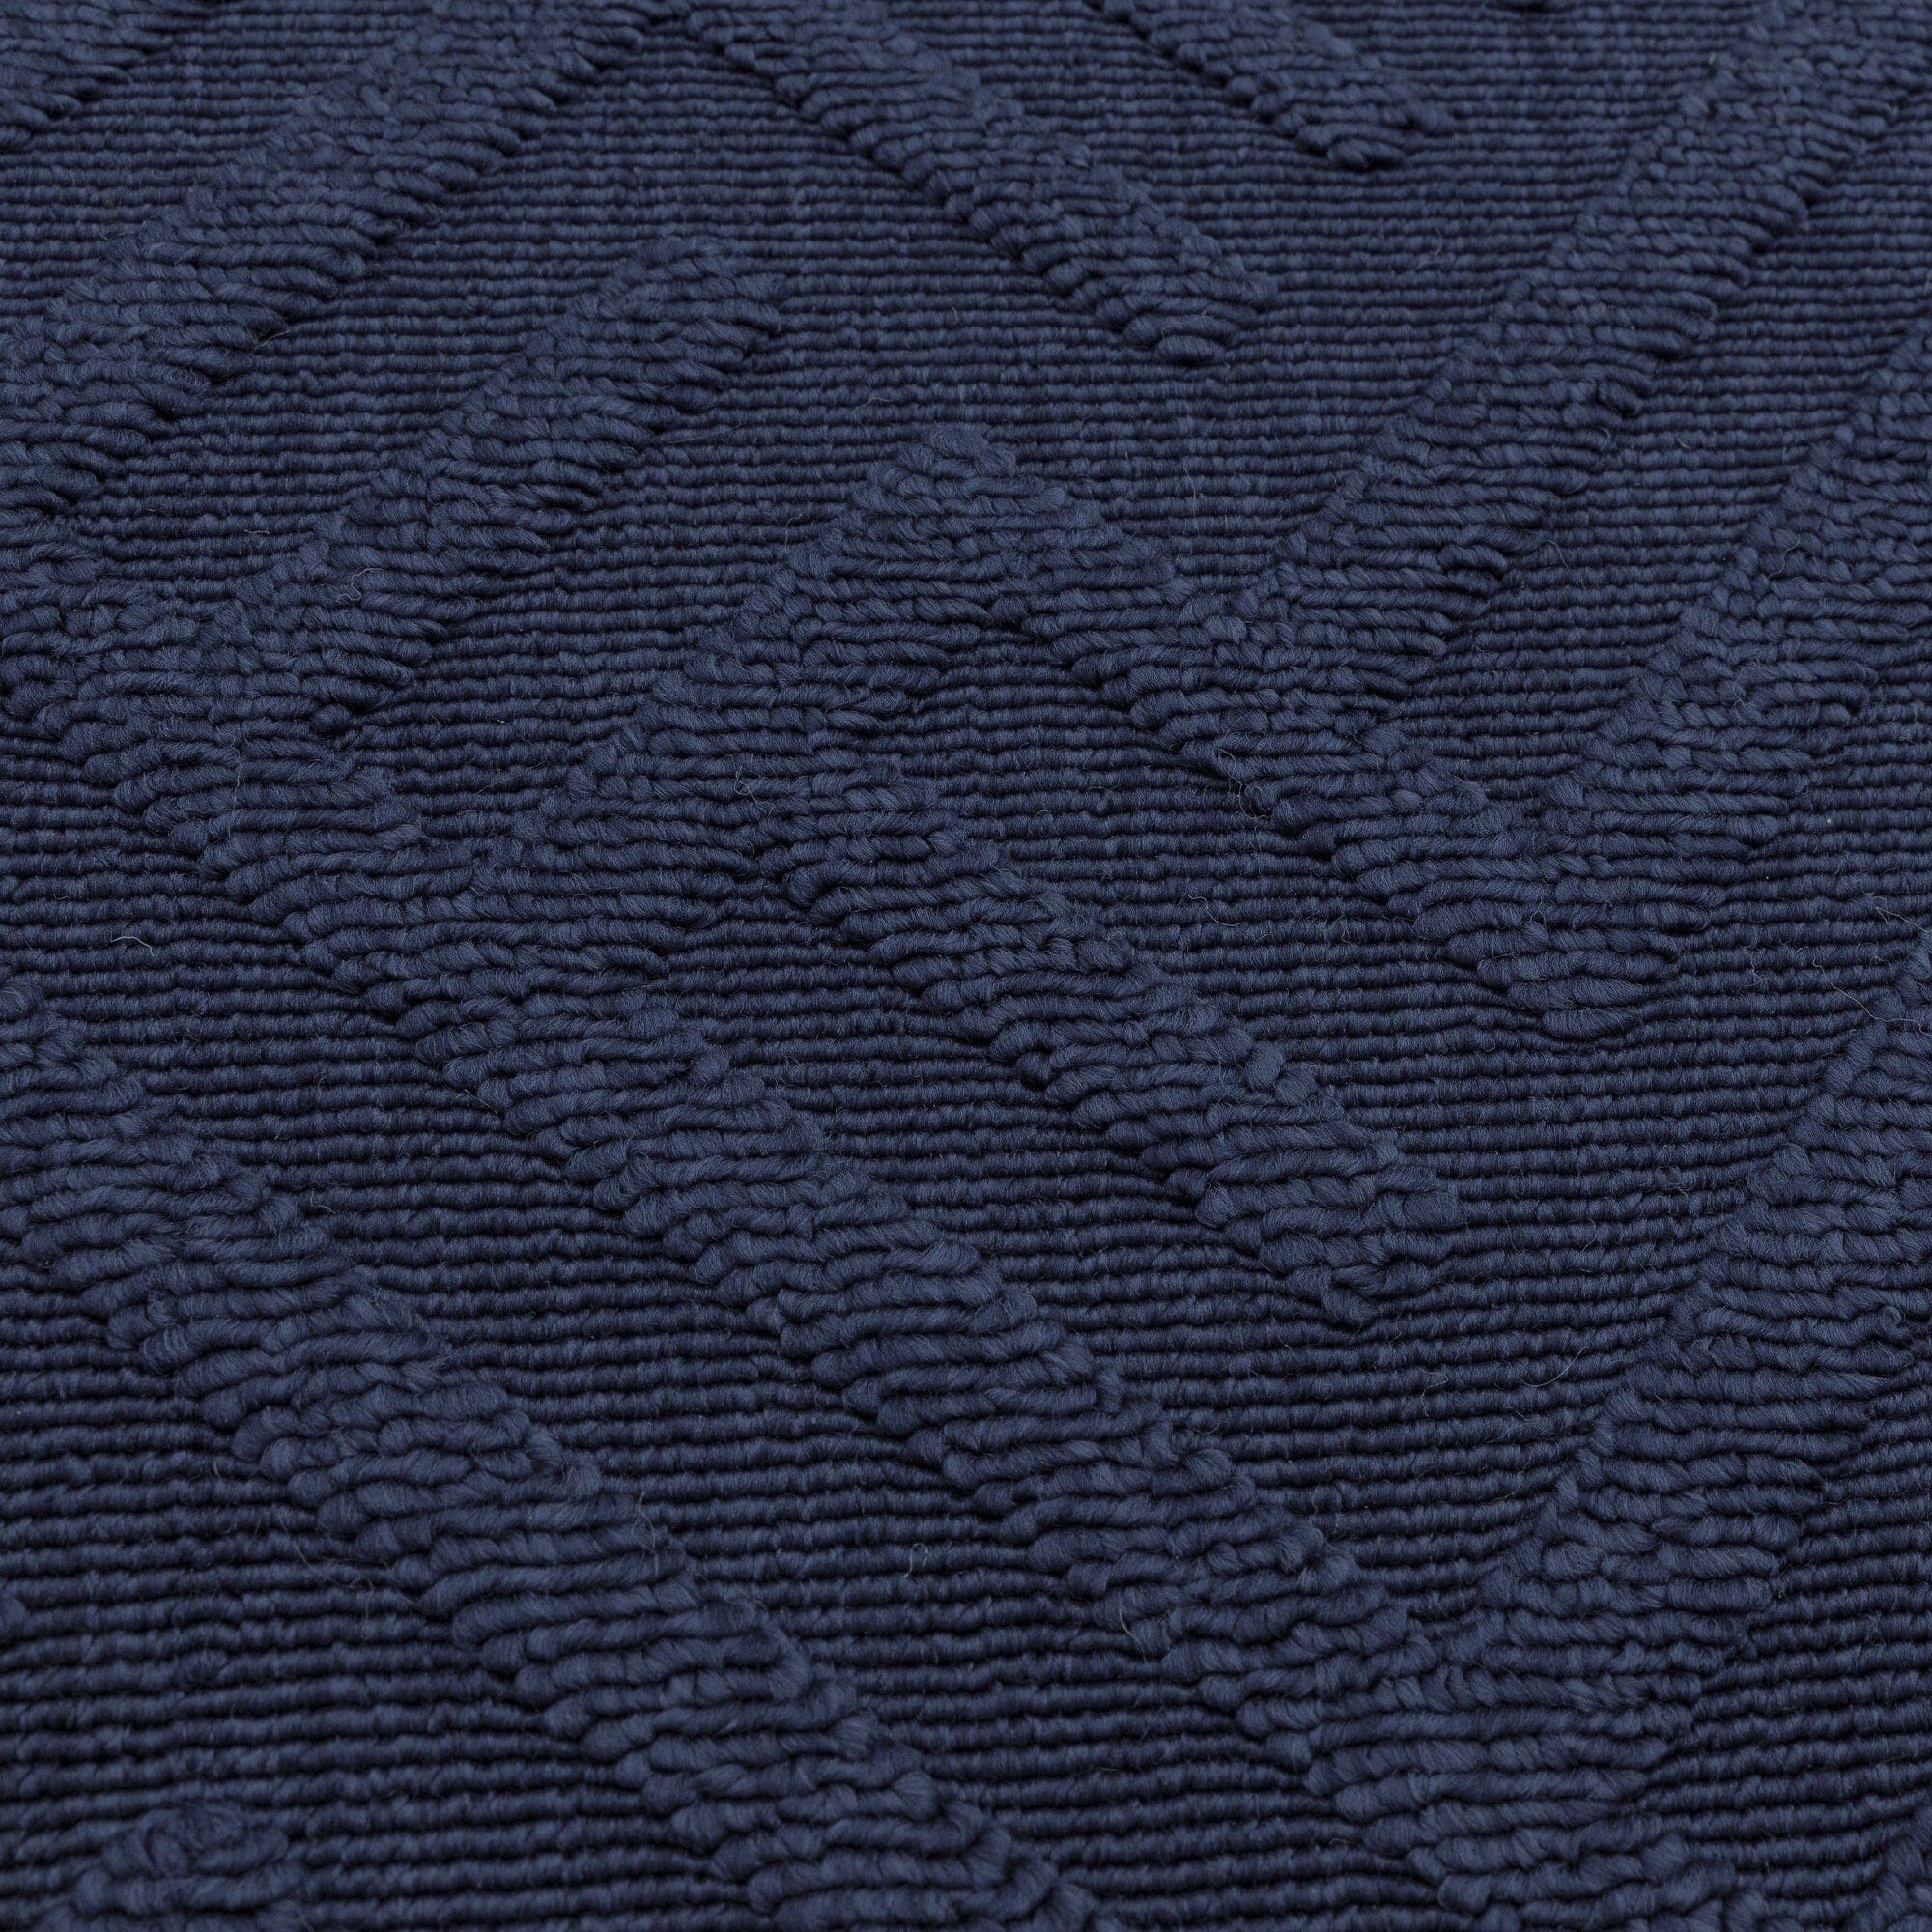 Antibes Rug - Blue Linear 200cm x 290cm